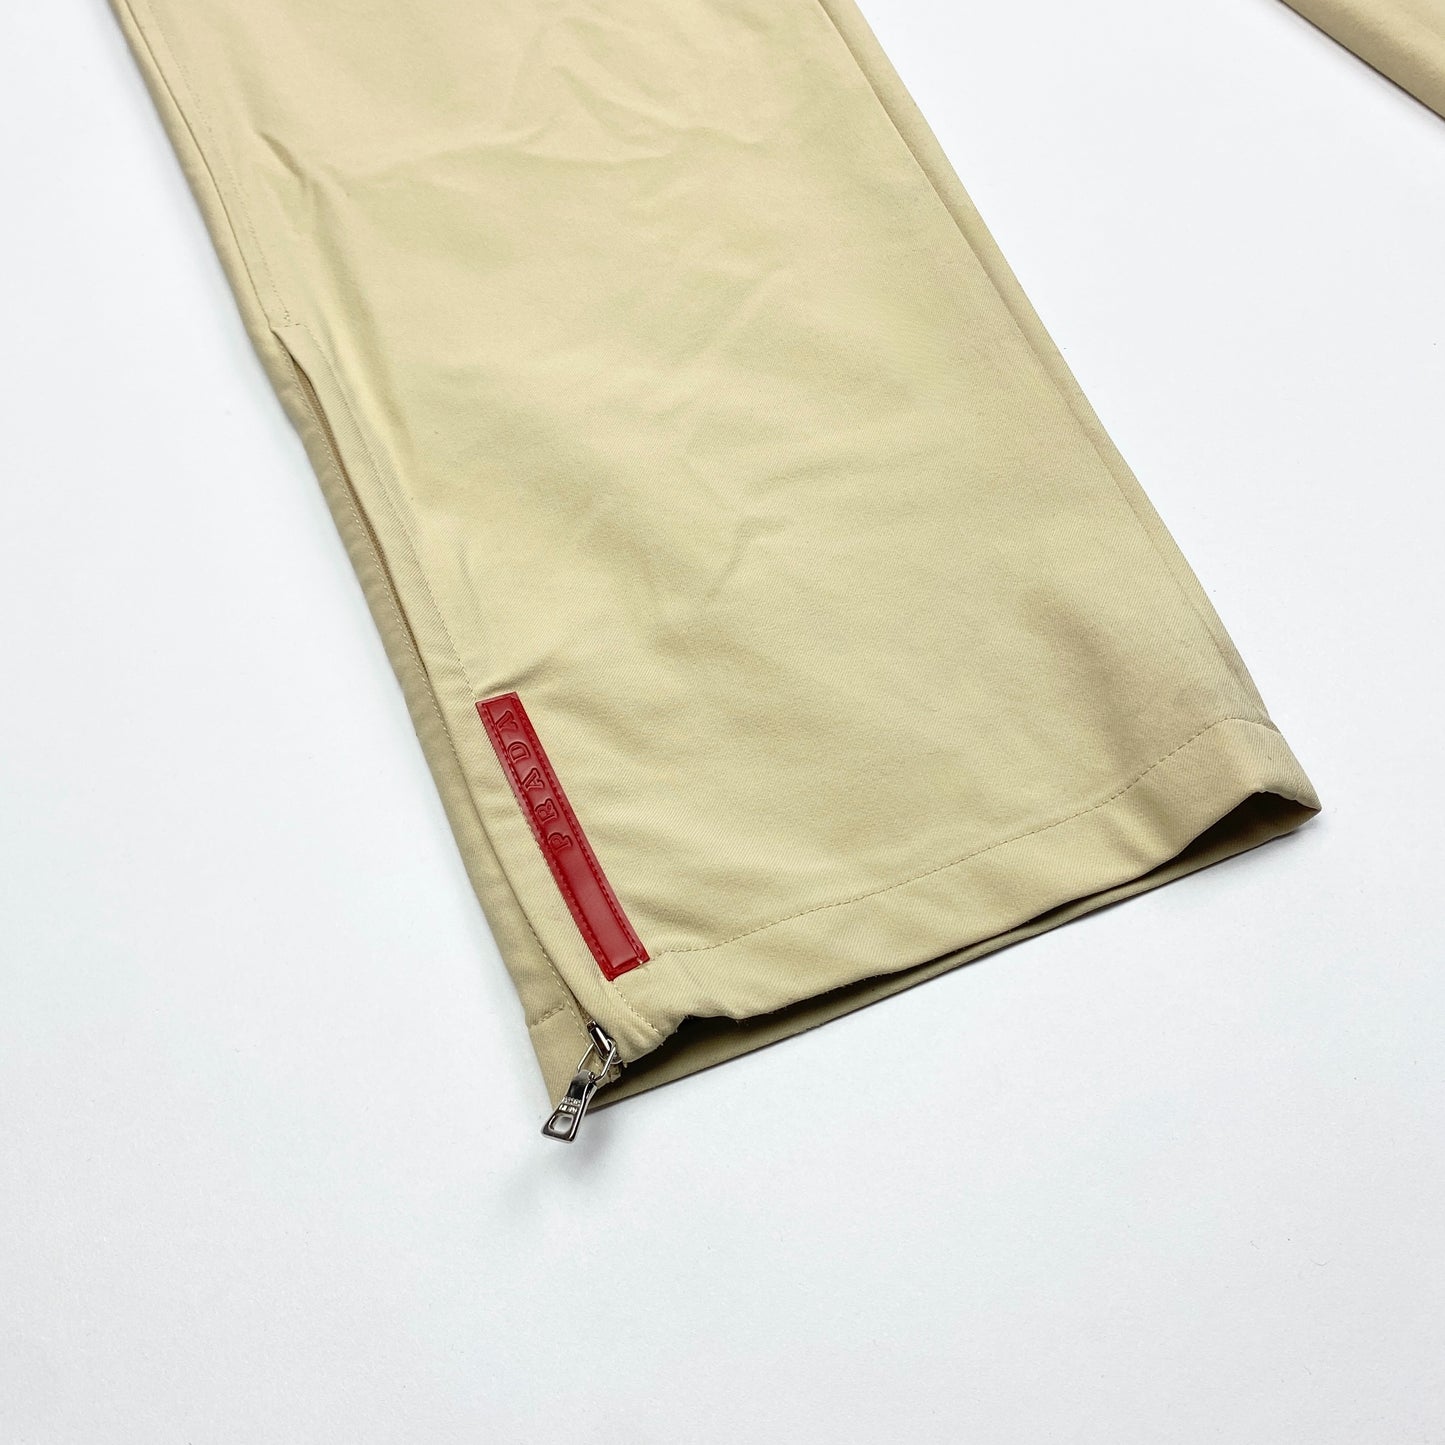 Vintage PRADA SPORT Chino Pants